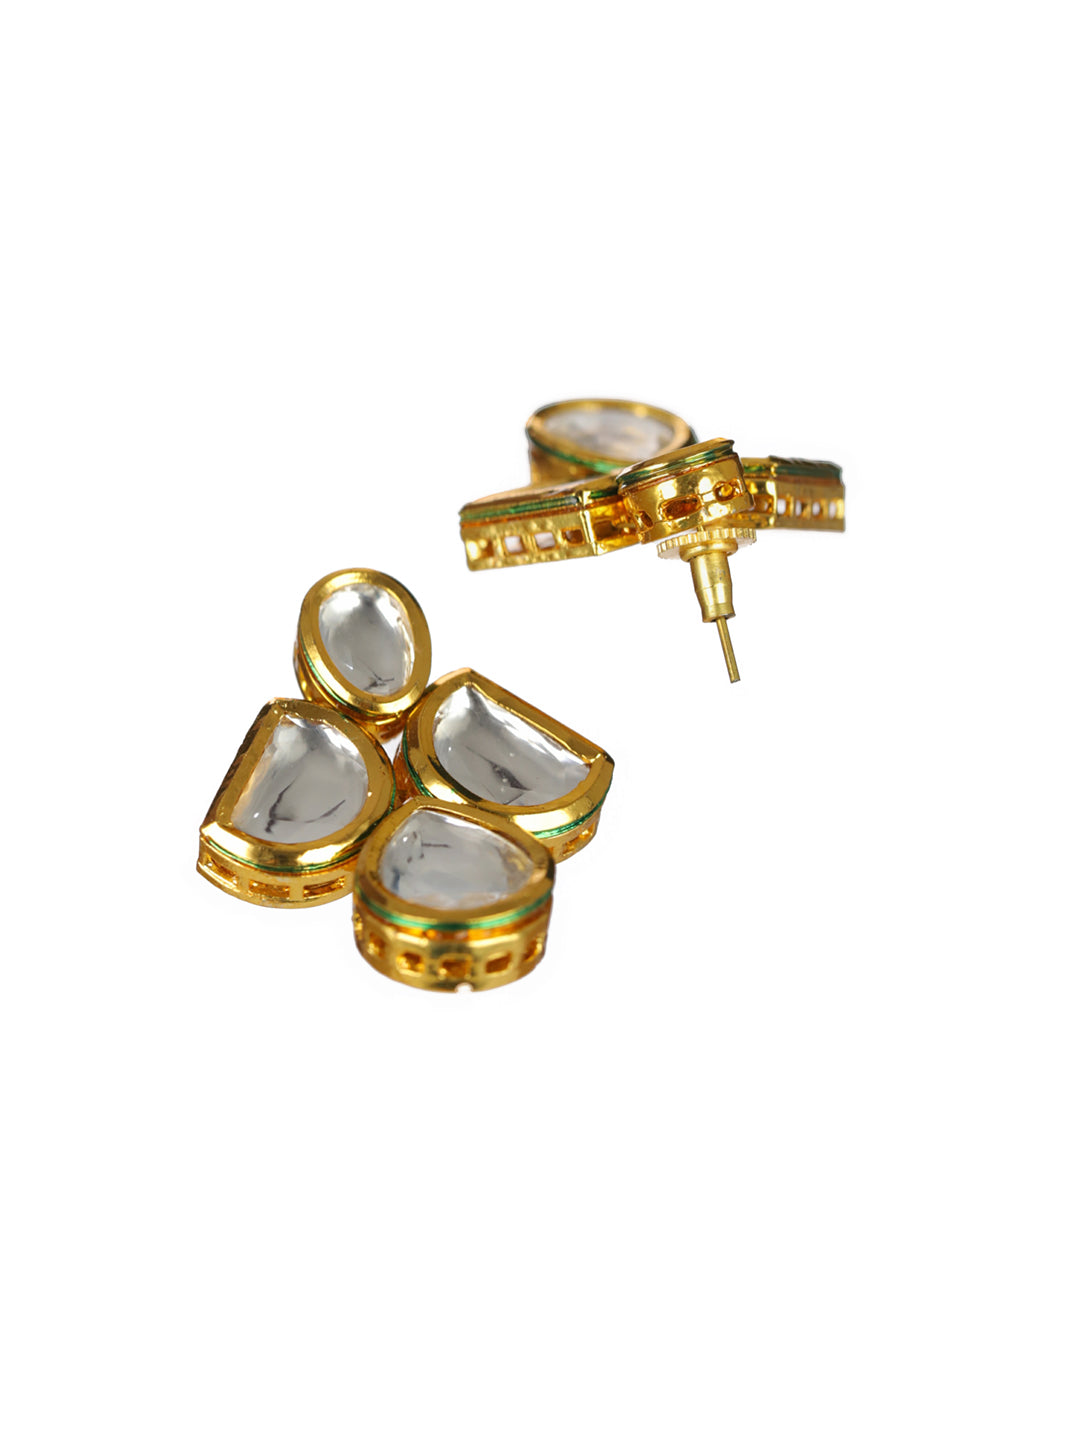 Priyaasi Contemporary Kundan Gold-Plated Jewellery Set